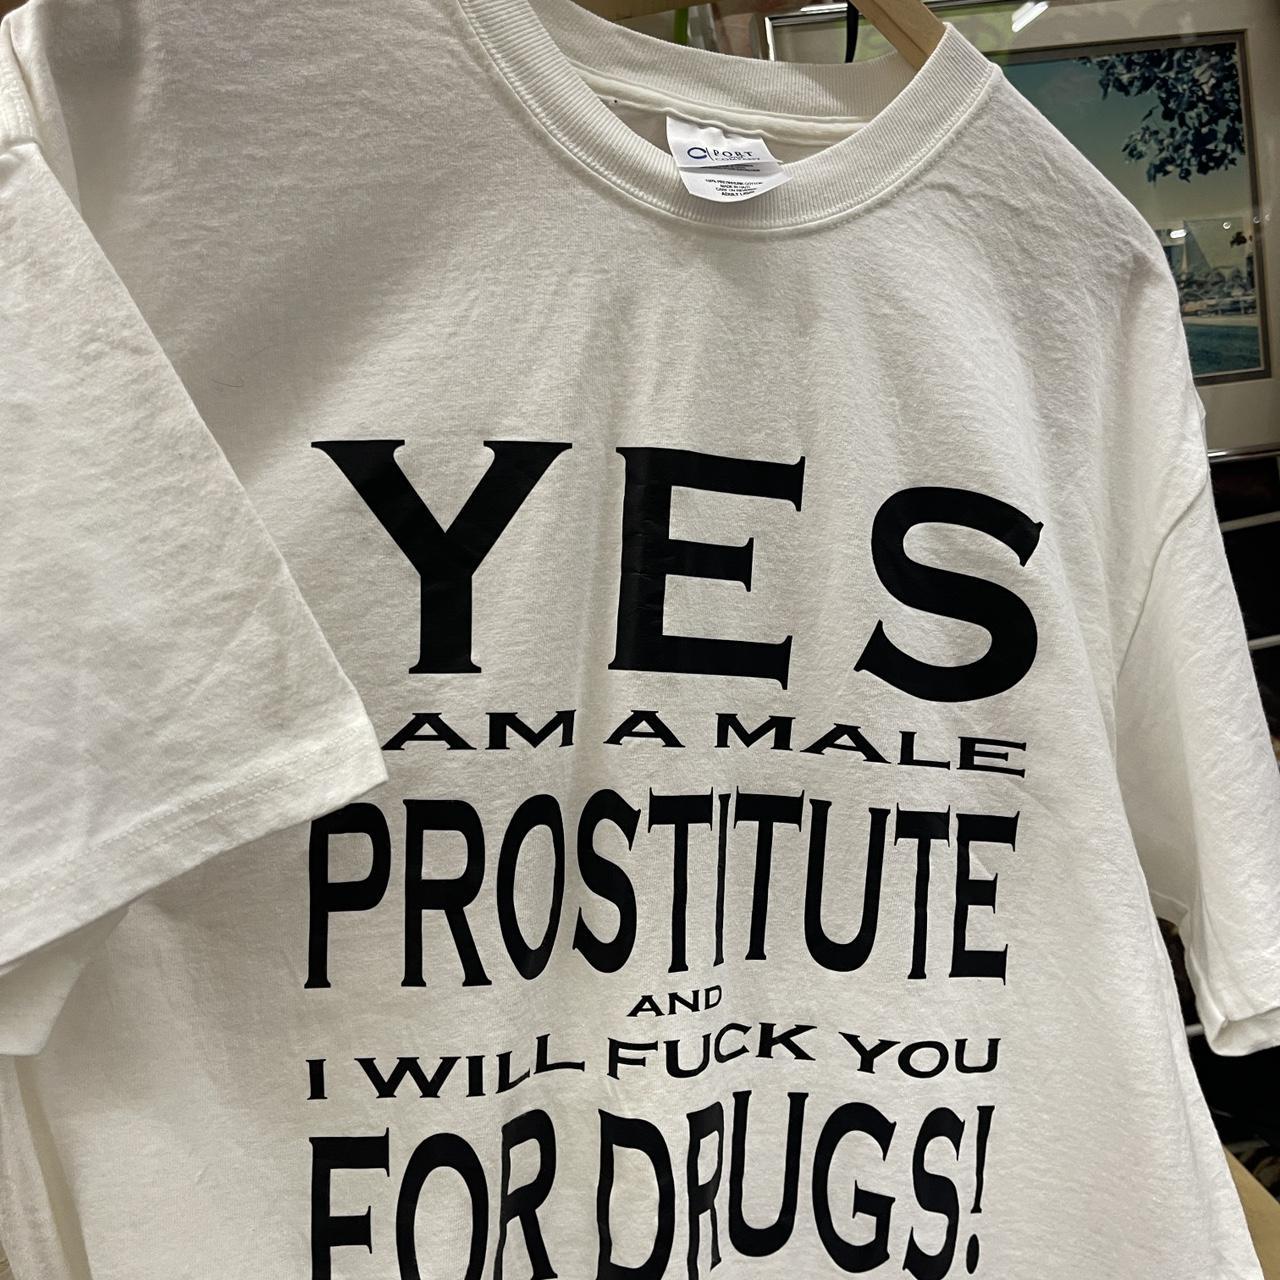 Male drug addicted prostitution shirt for the... - Depop